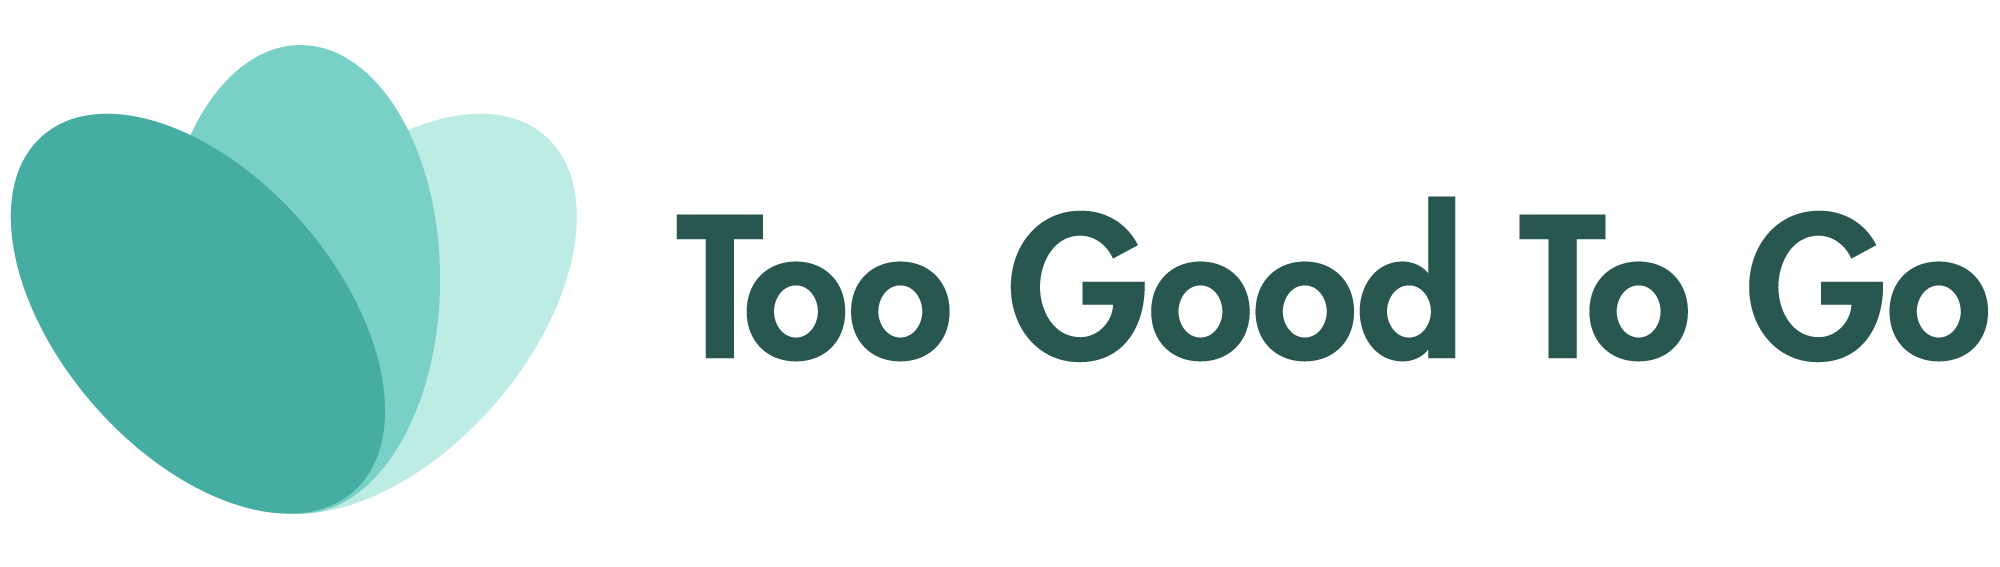 En partenariat avec Too Good To Go